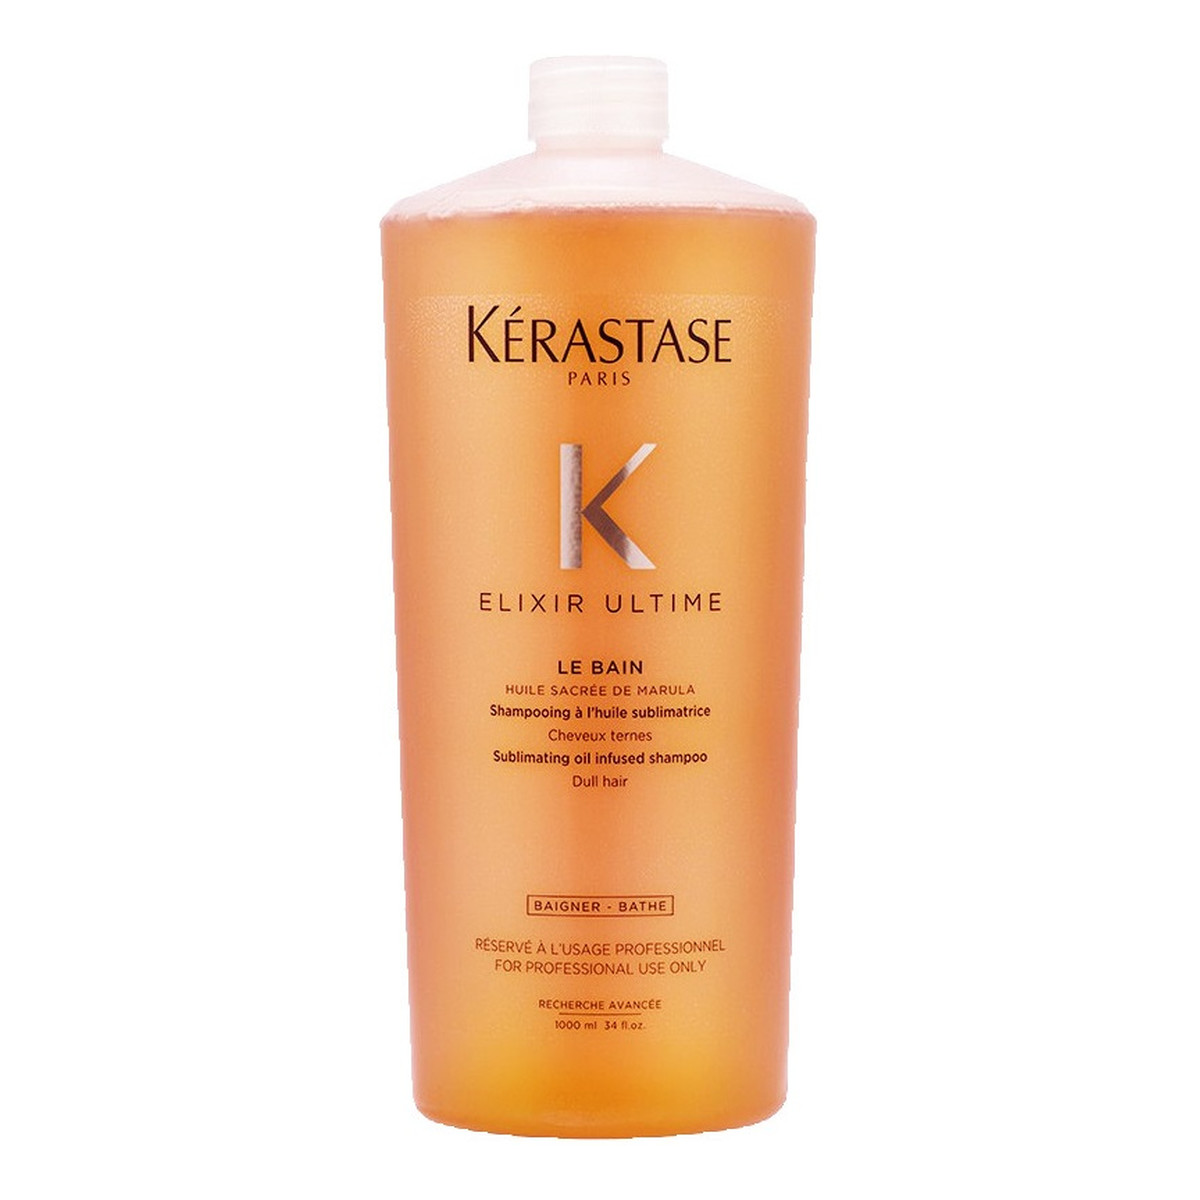 Kerastase Elixir ultime shampoo szampon do włosów wzbogacony olejem marula 1000ml